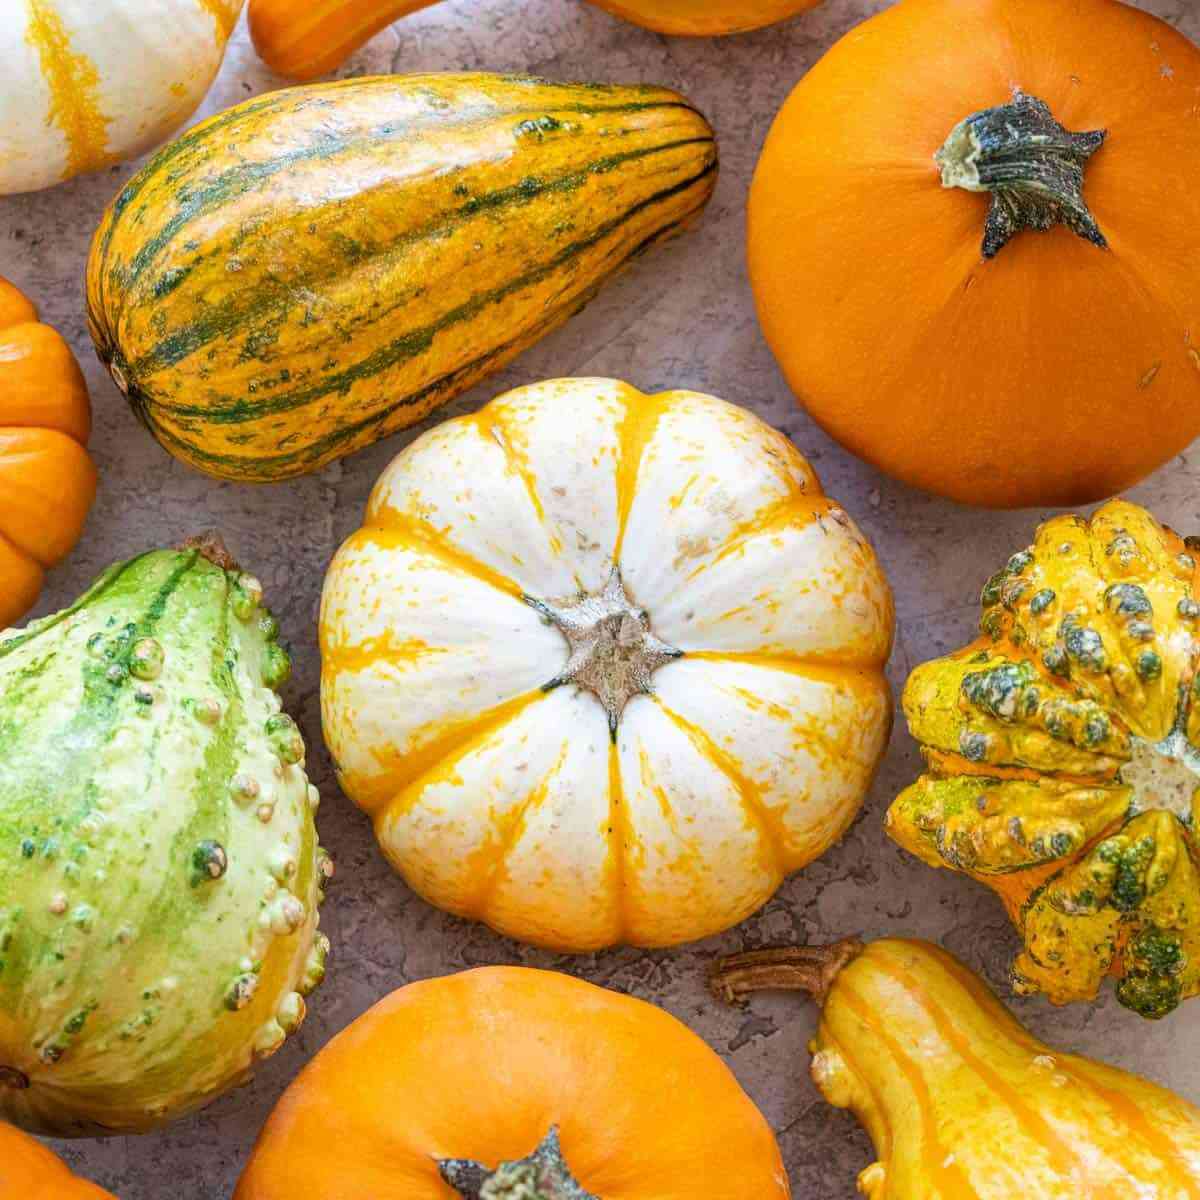 Review of the best varieties of pumpkin